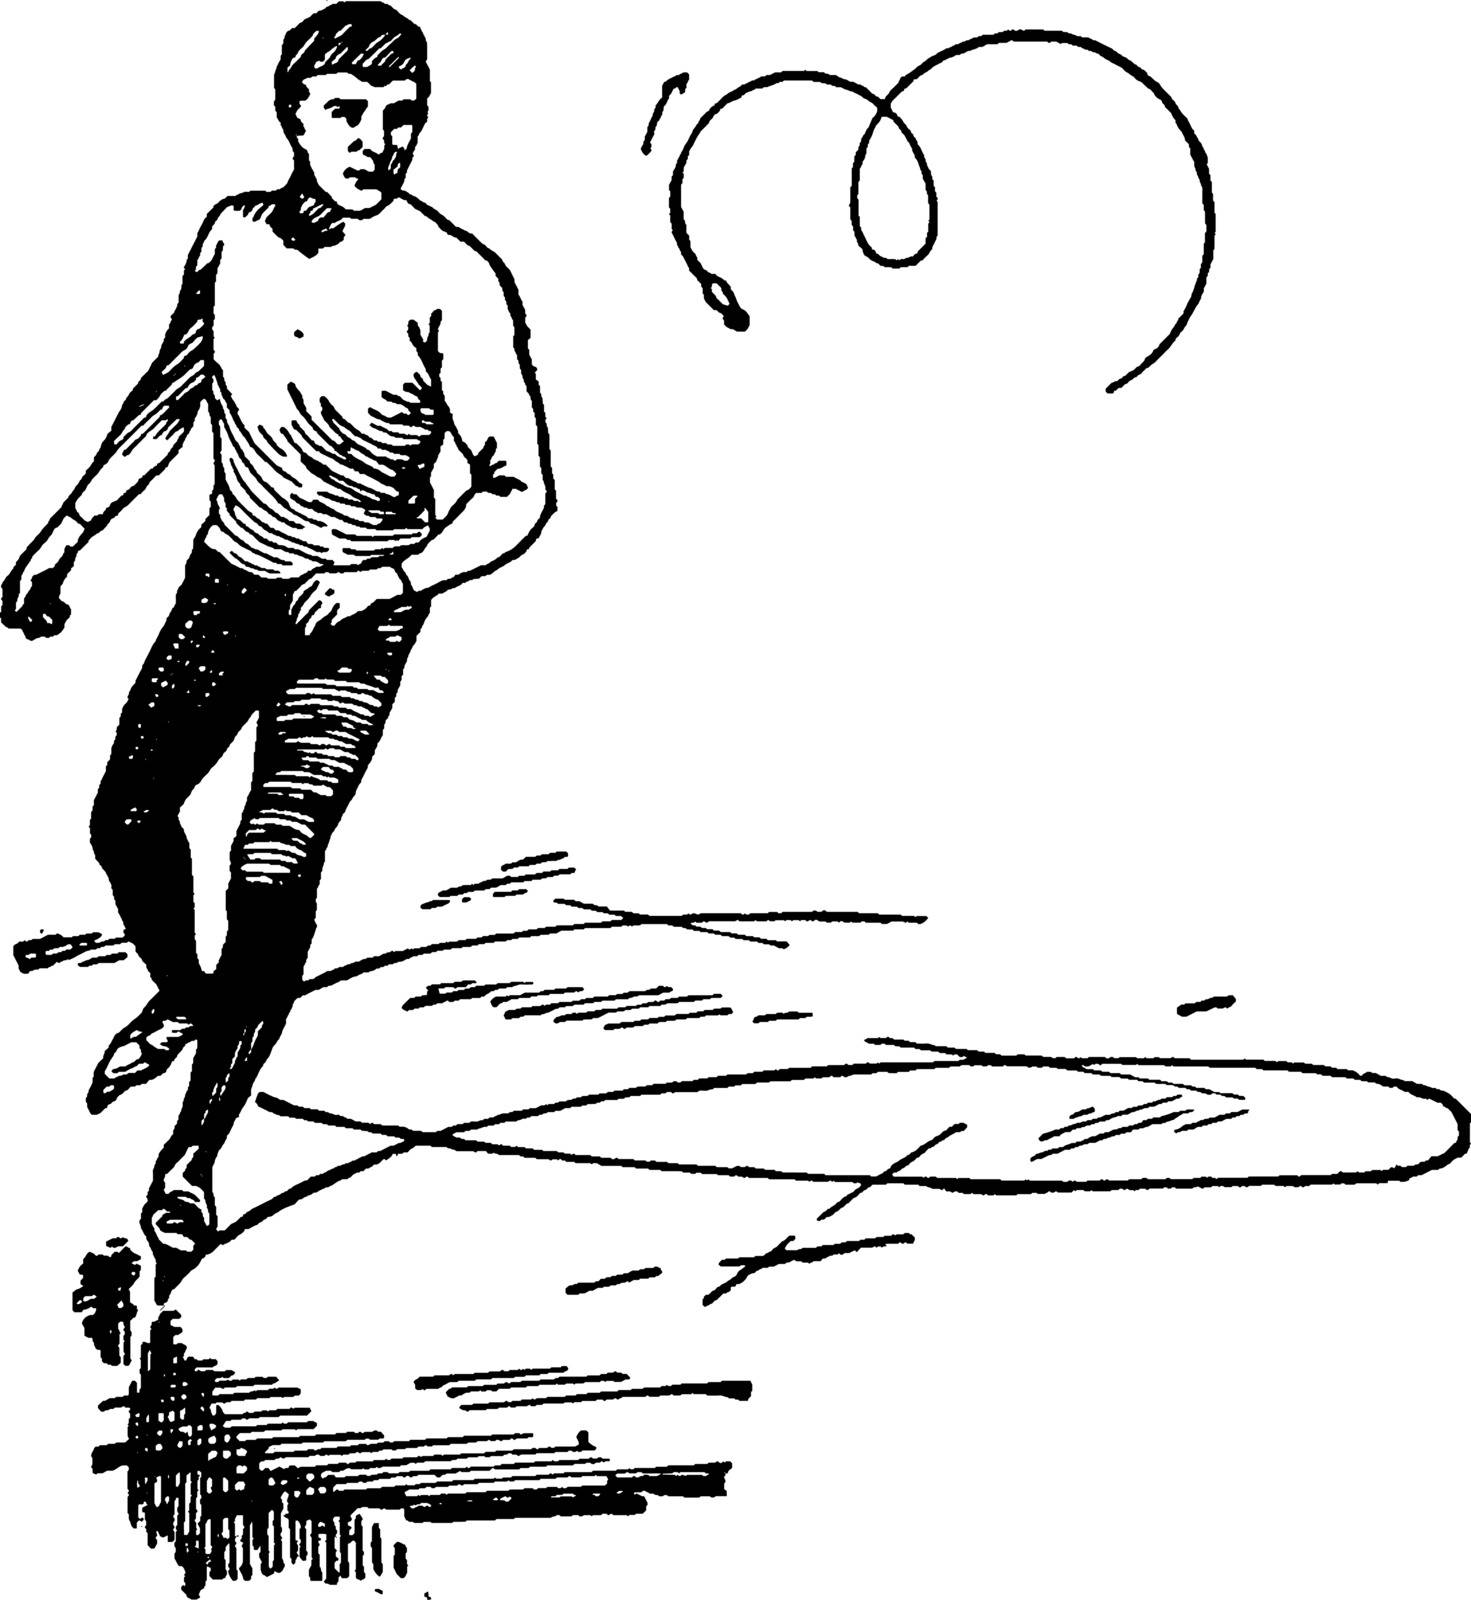 A boy making loop figure while skating, vintage line drawing or engraving illustration.